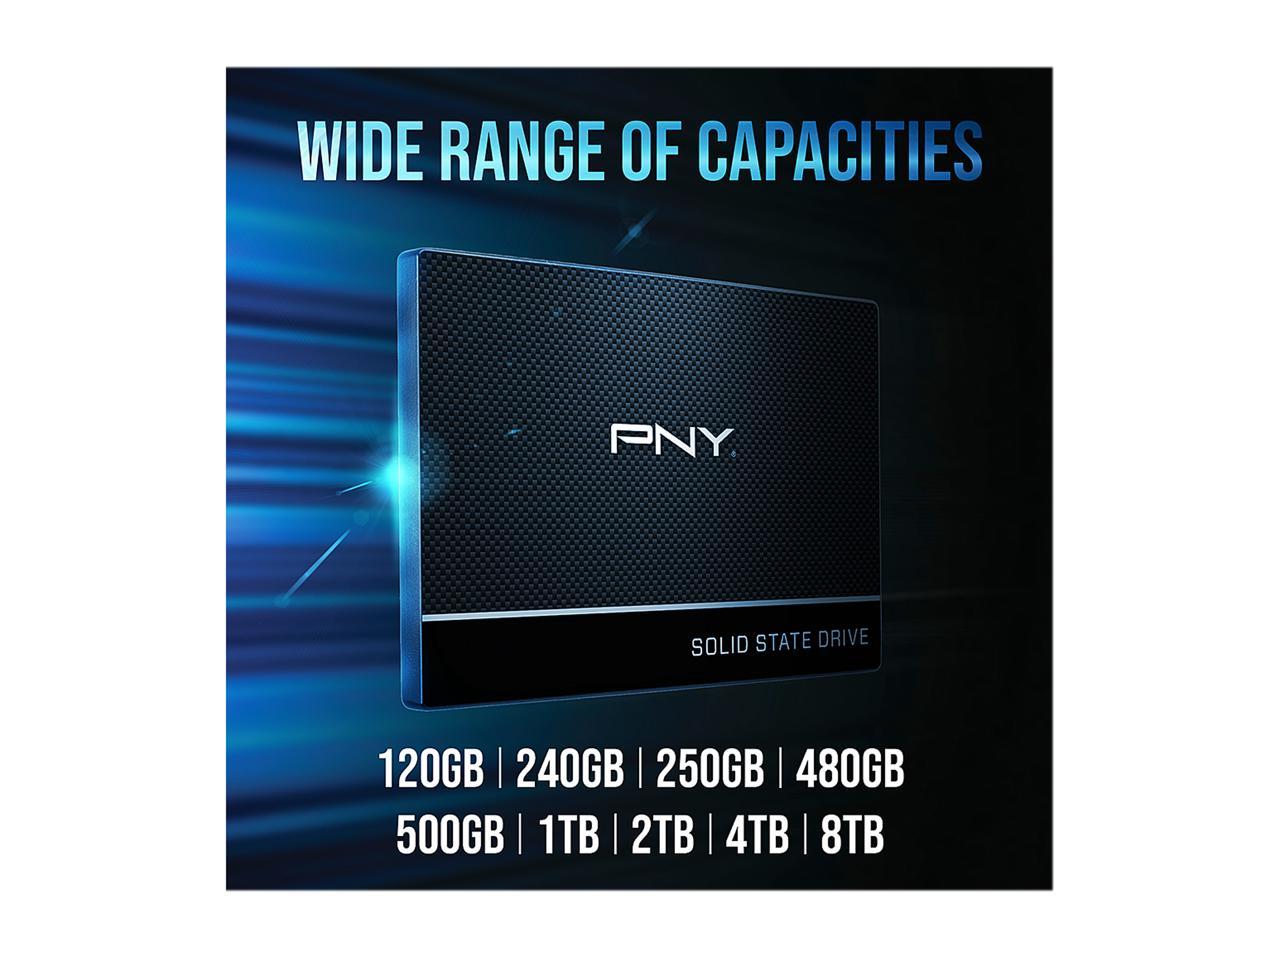 PNY CS900 240GB 2.5